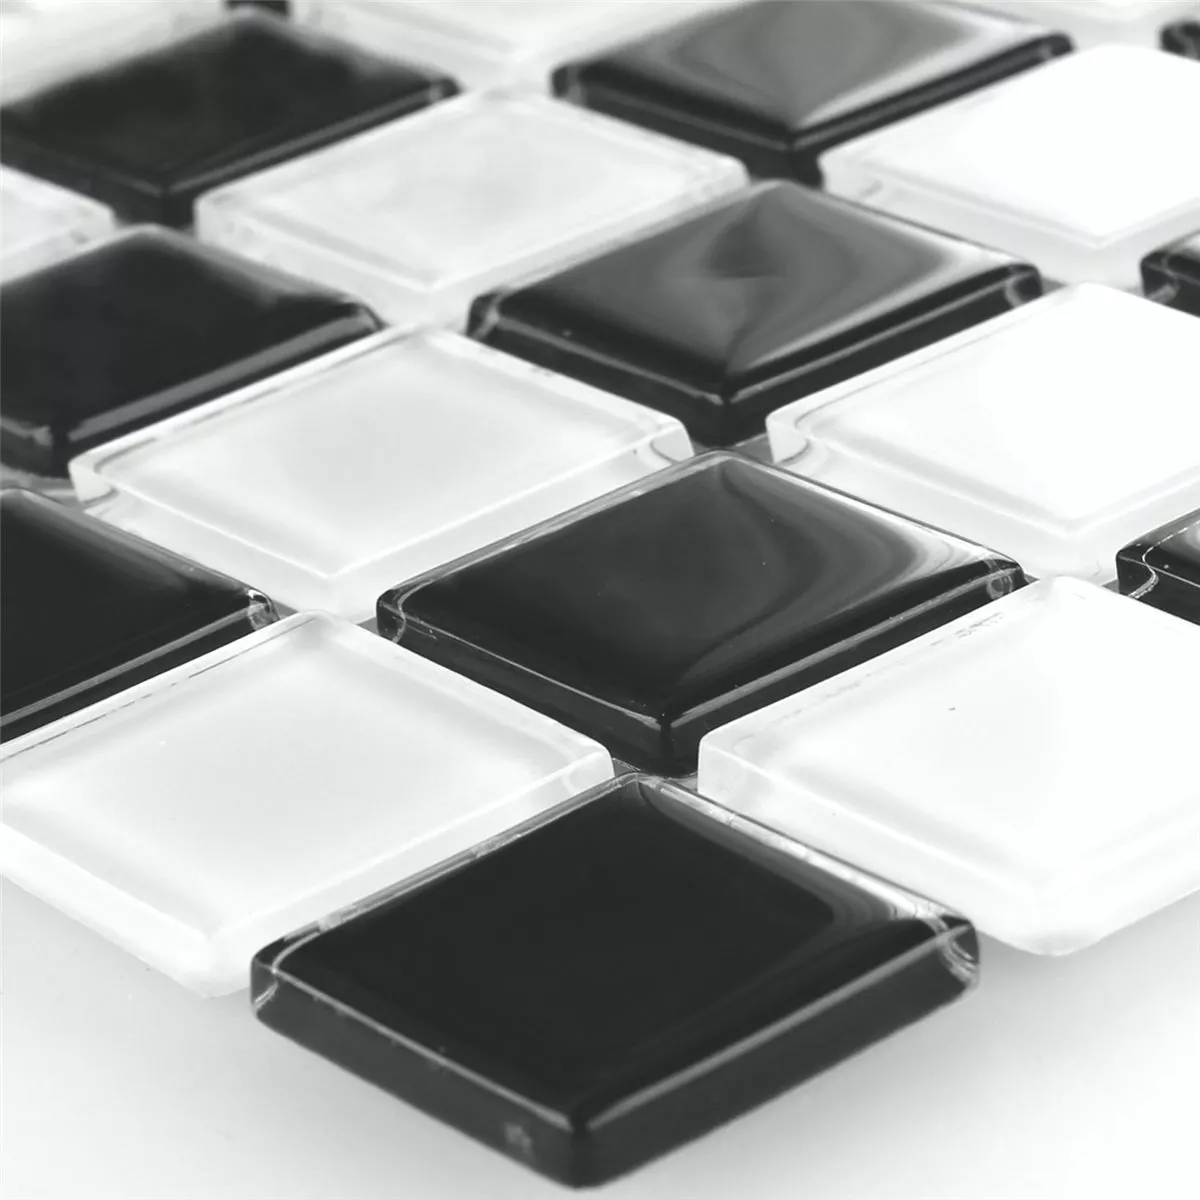 Mosaic Tiles Glass Chess Board Black White